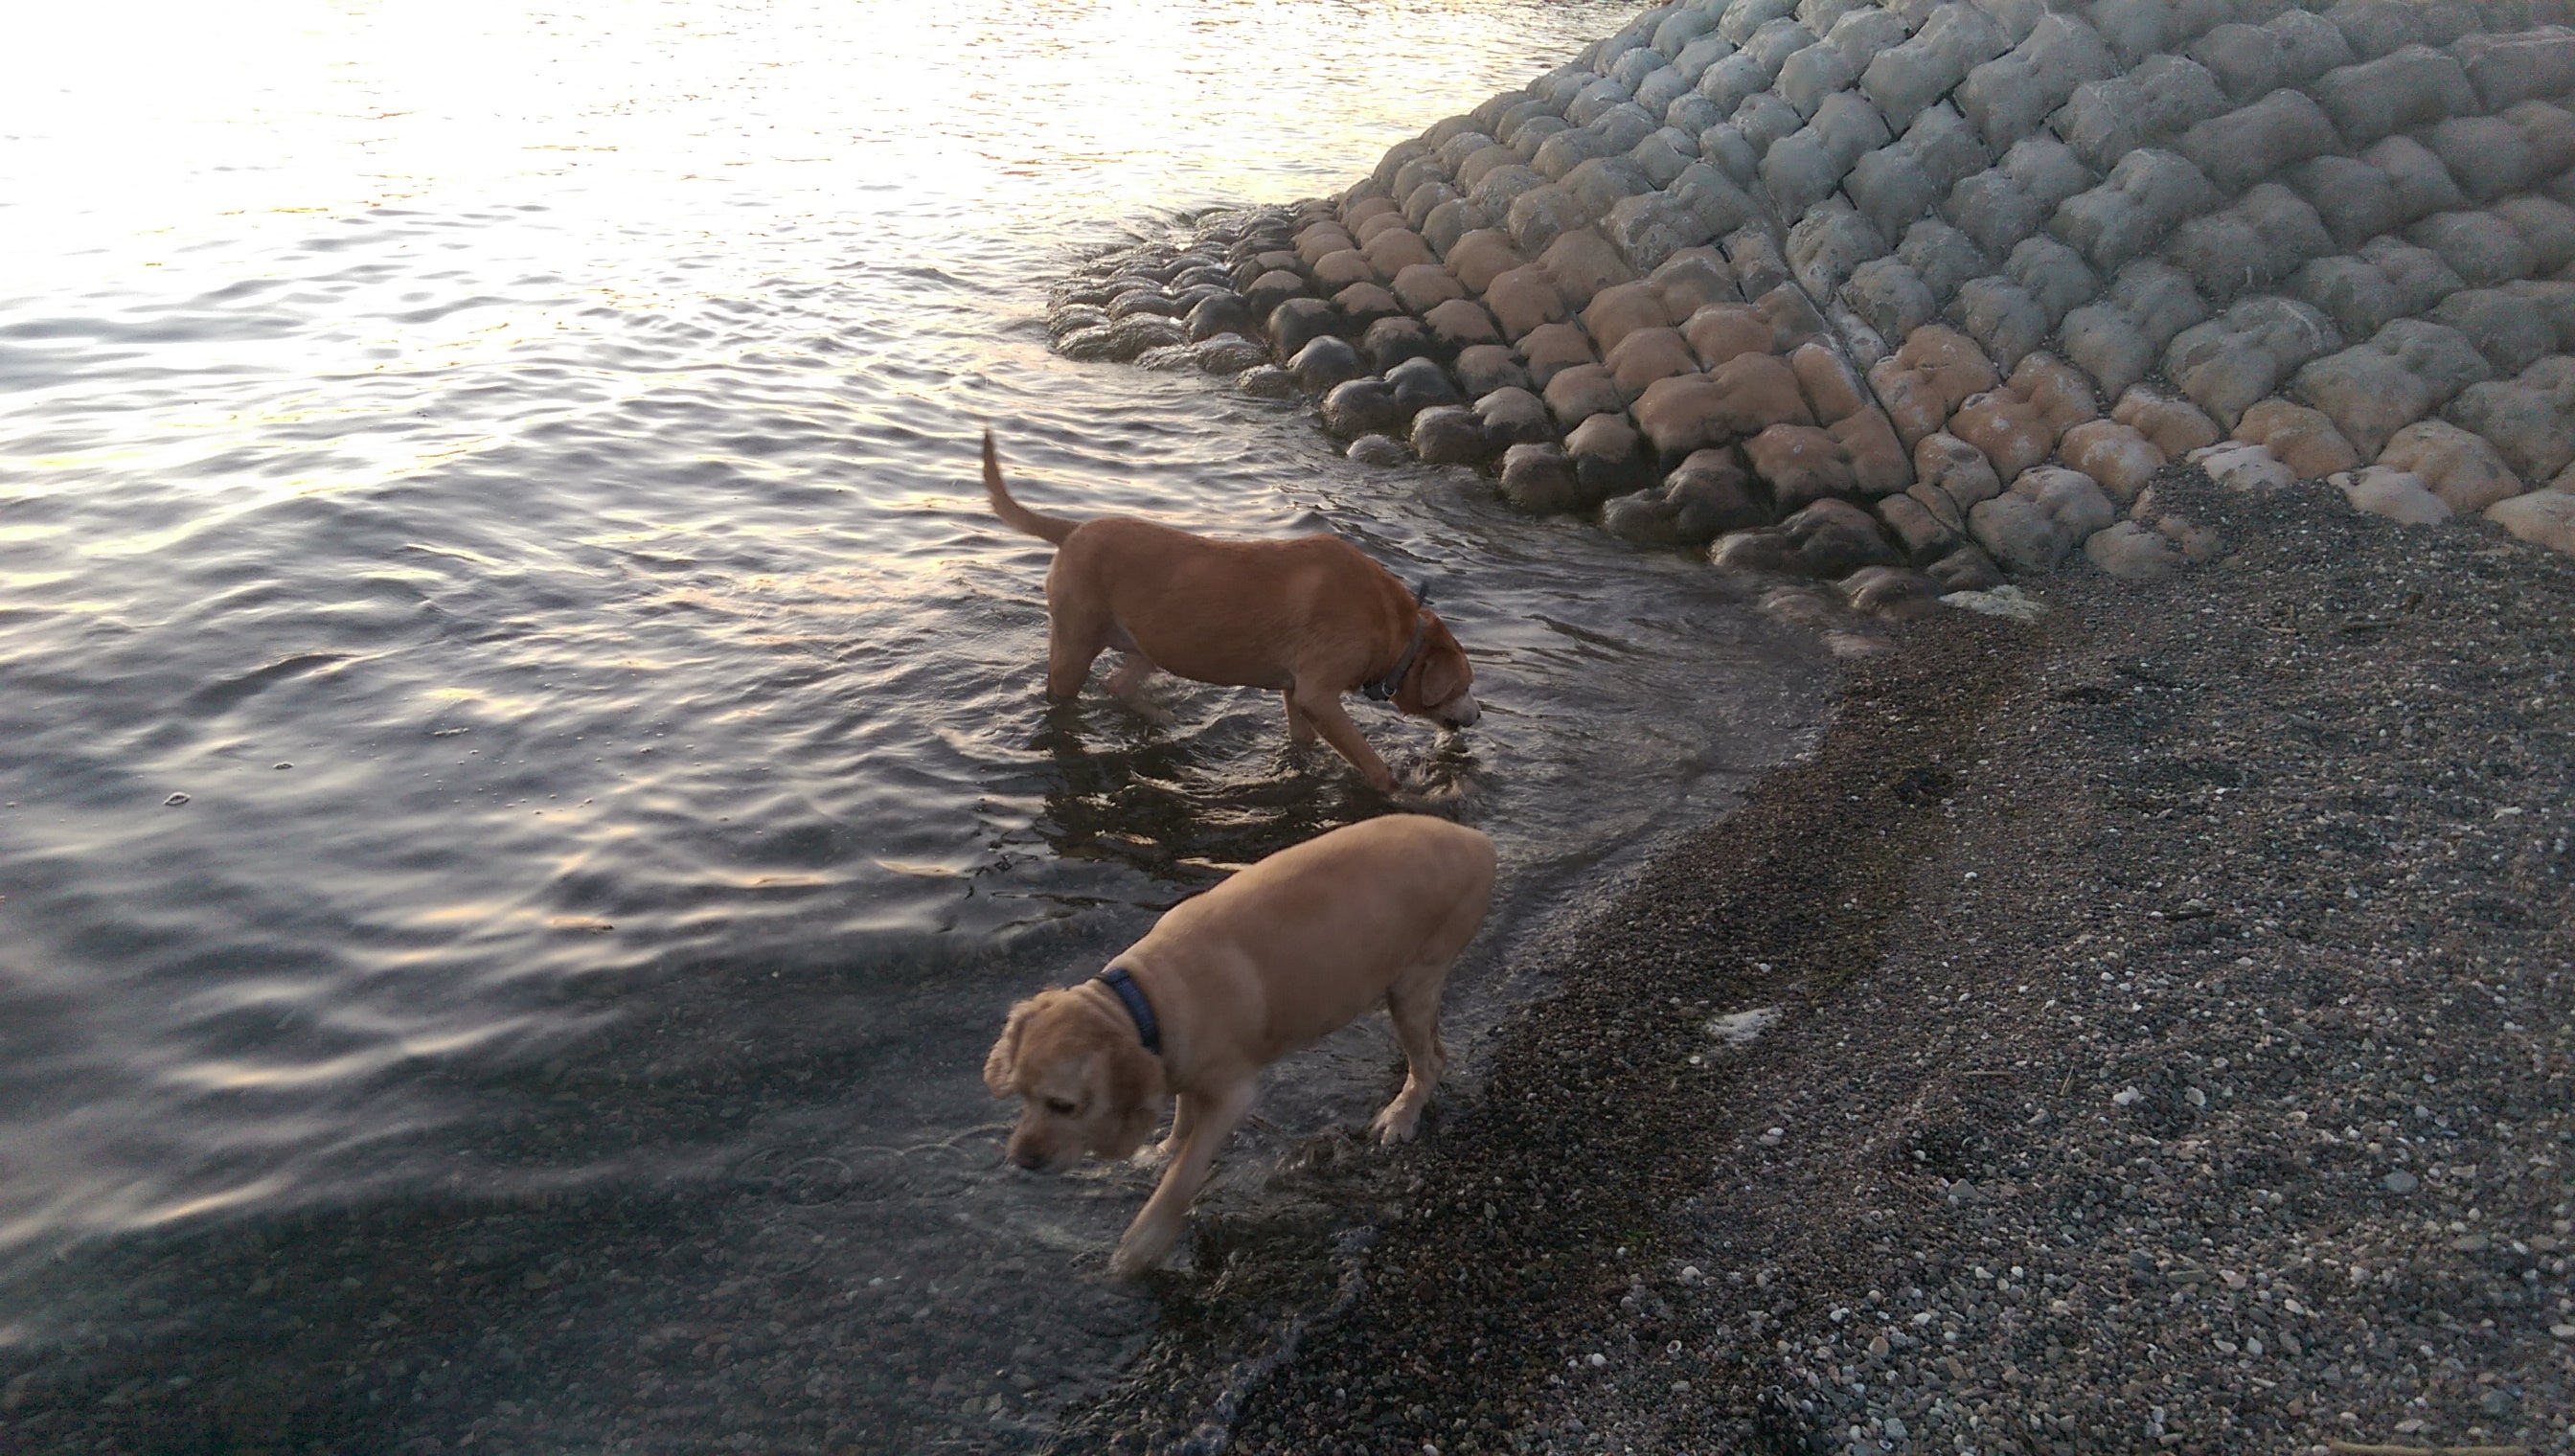 Dog beach